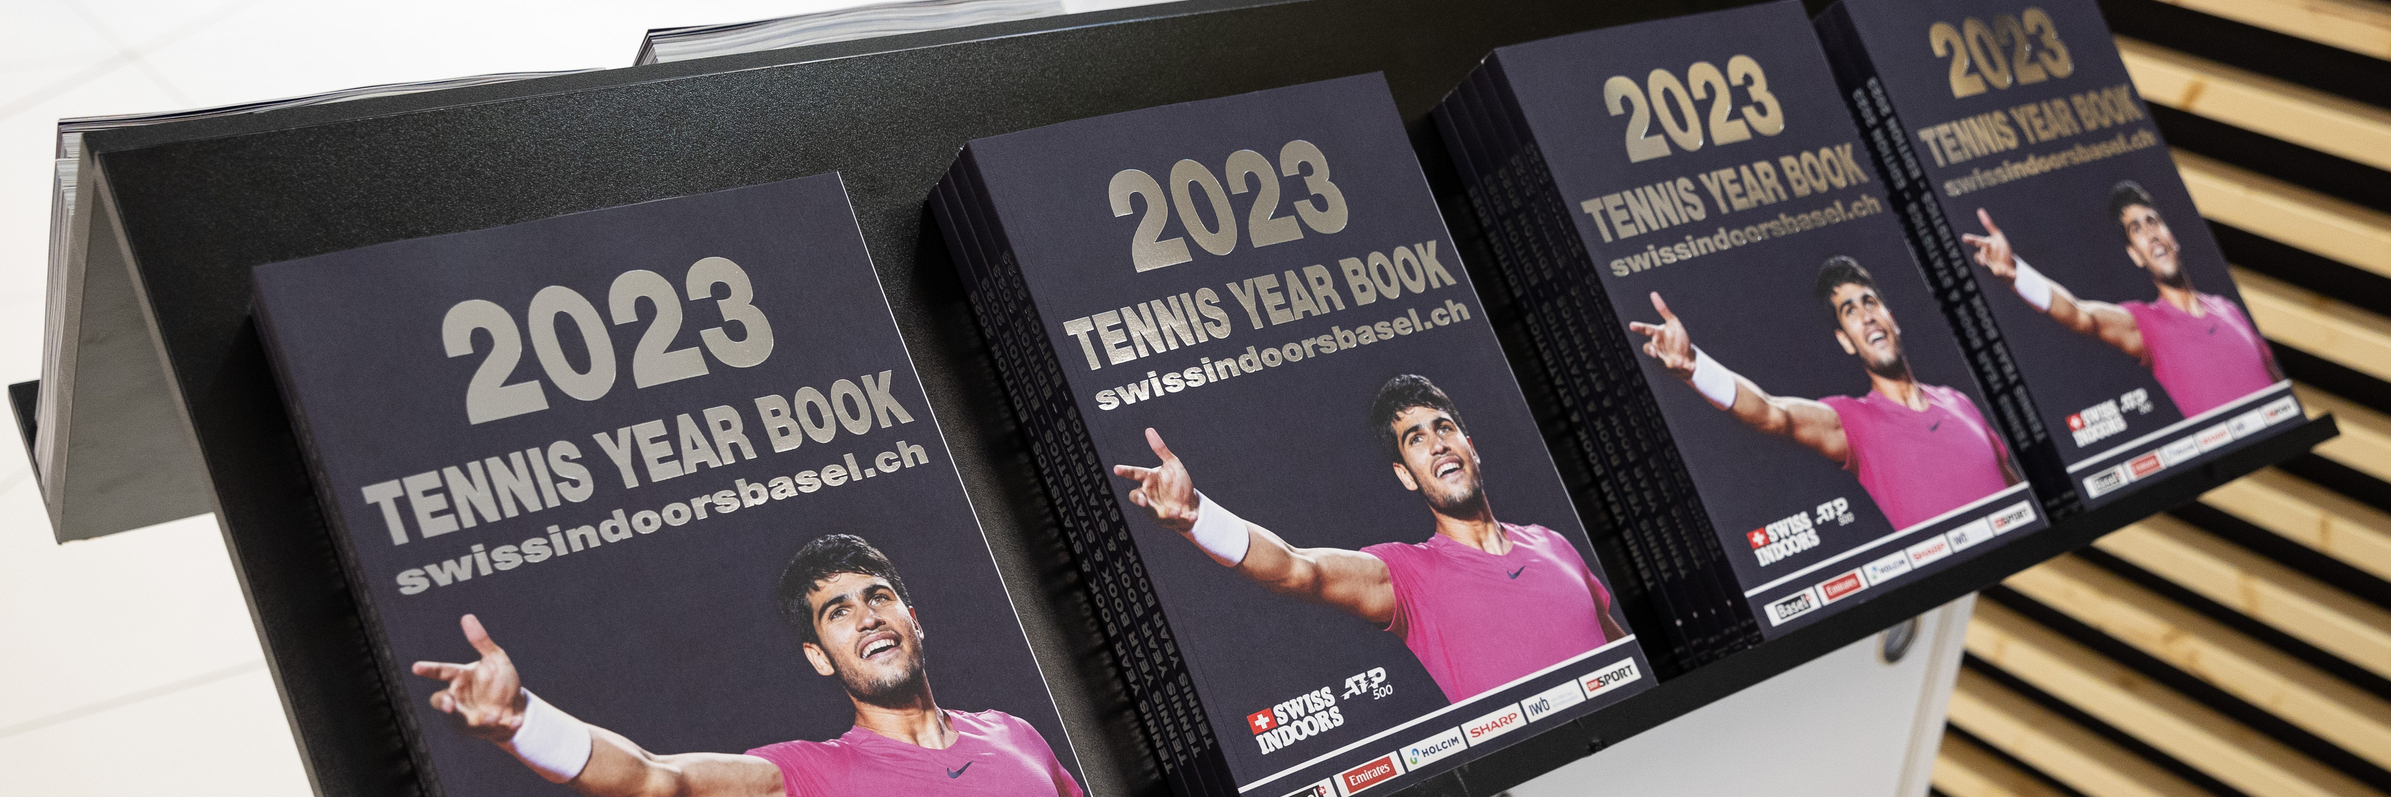 Tennis  Year Book